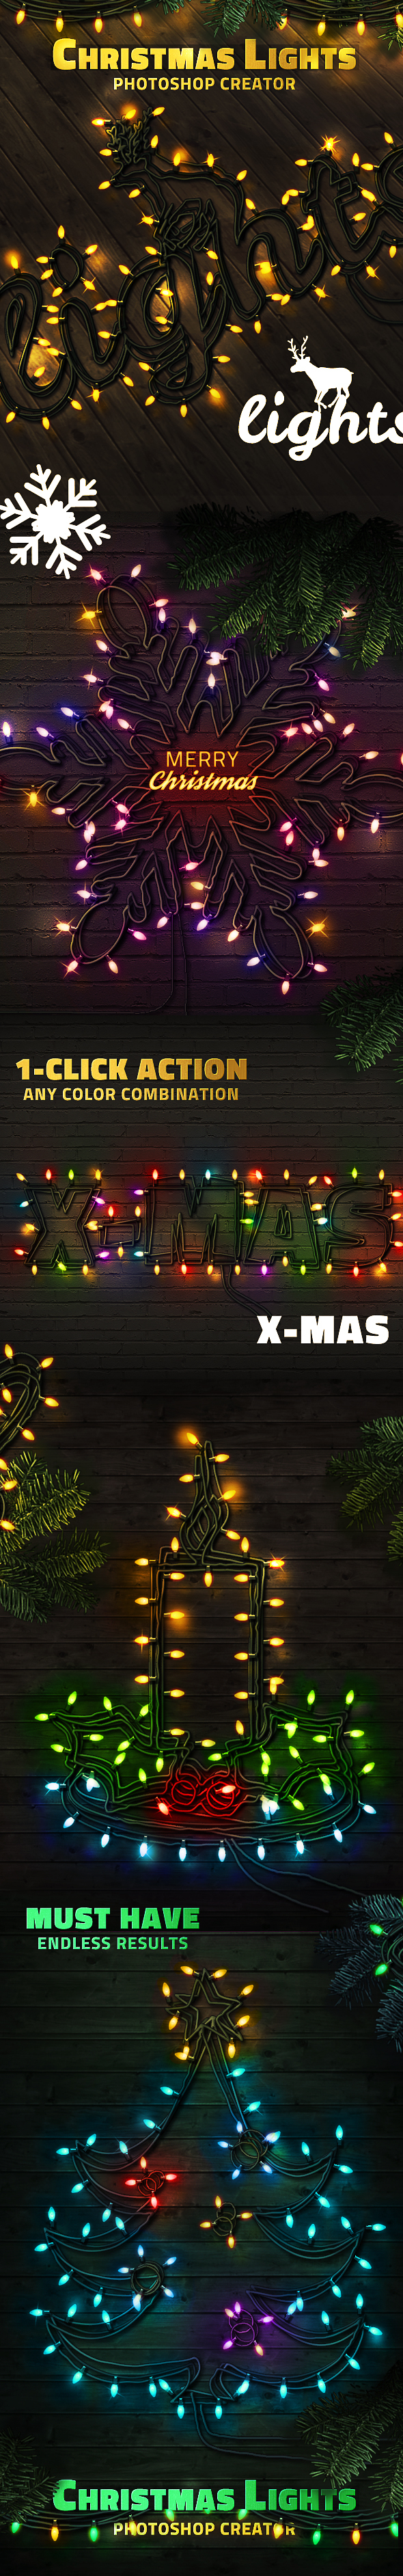 Christmas Lights Photoshop Creator